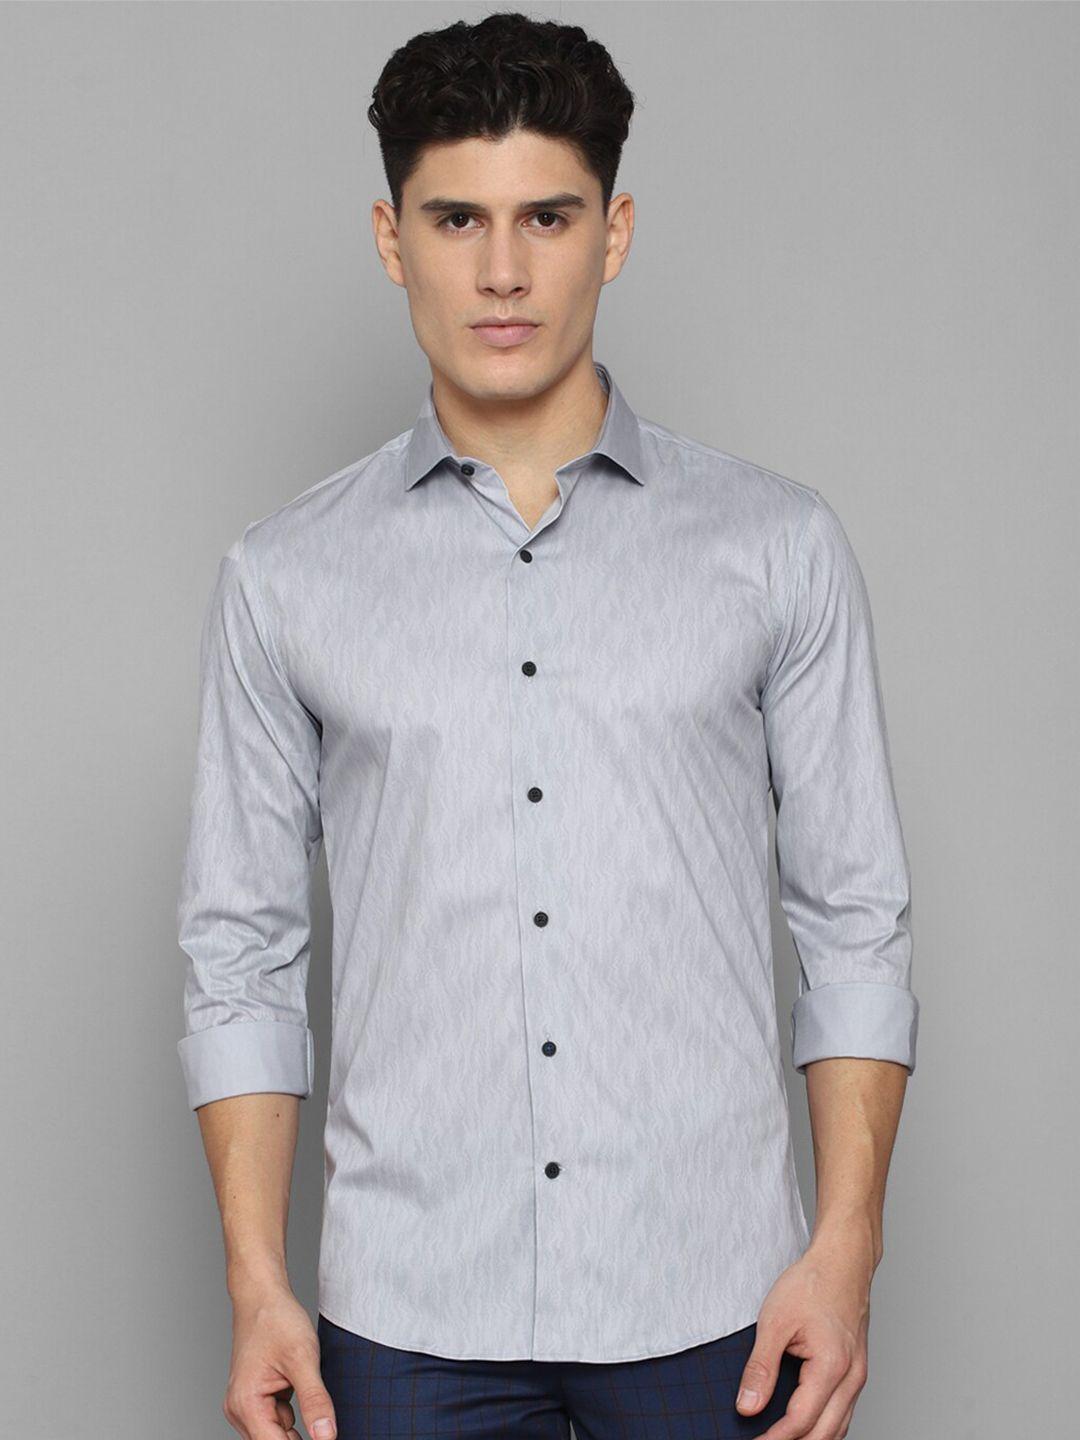 louis philippe sport men slim fit printed casual cotton shirt